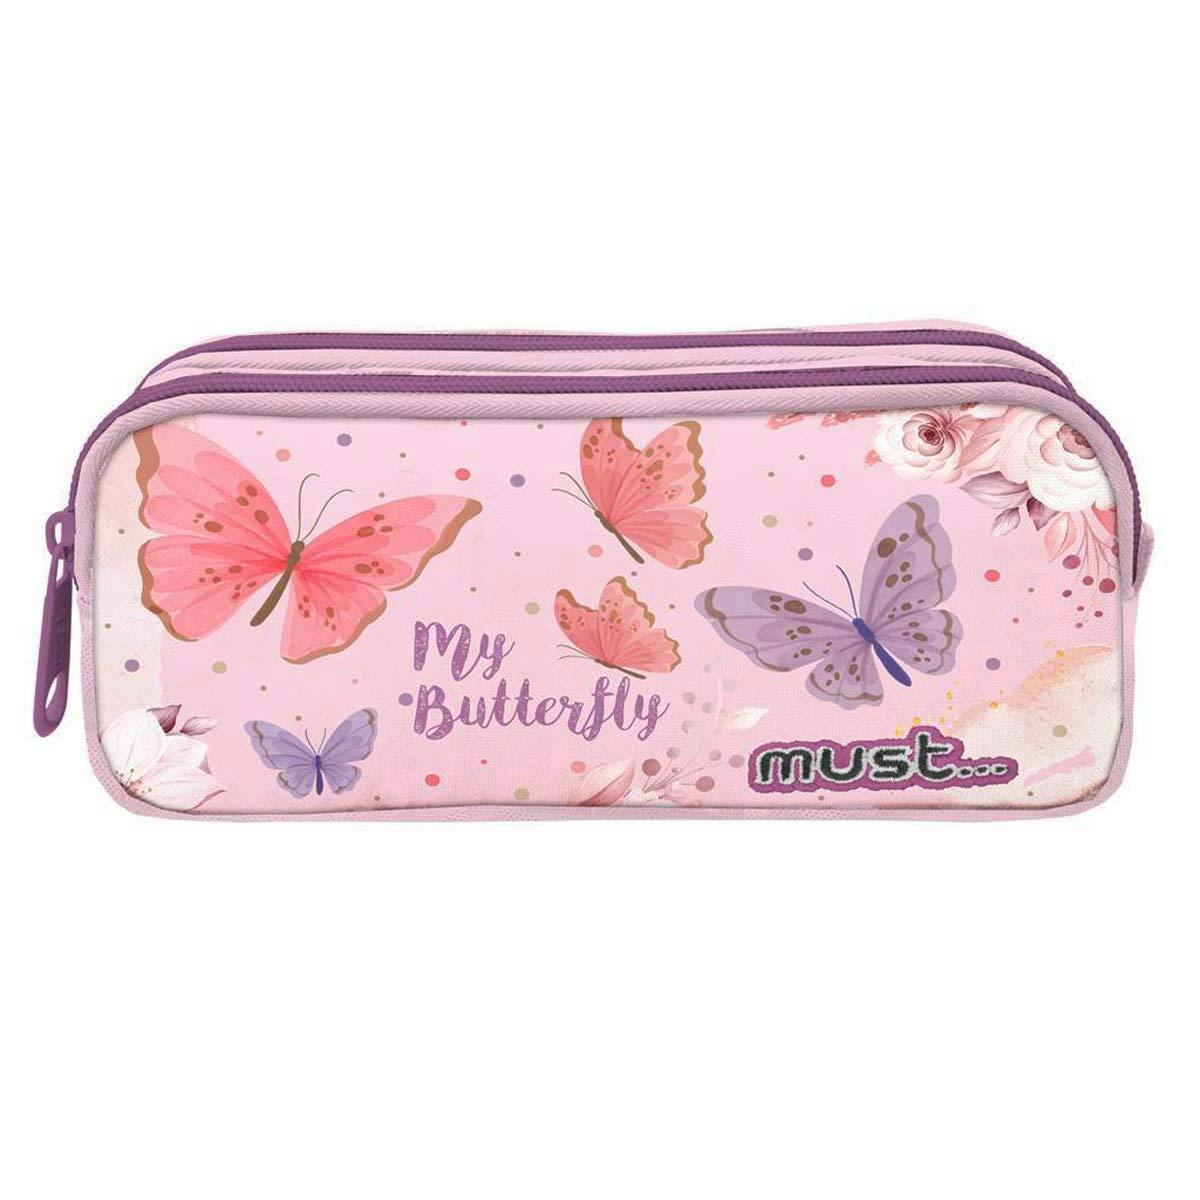 Must Σχολική Κασετίνα Βαρελάκι  My Butterfly 2 ΘΗΚΕΣ σε Ροζ Χρώμα 21x6x9 εκ 585186